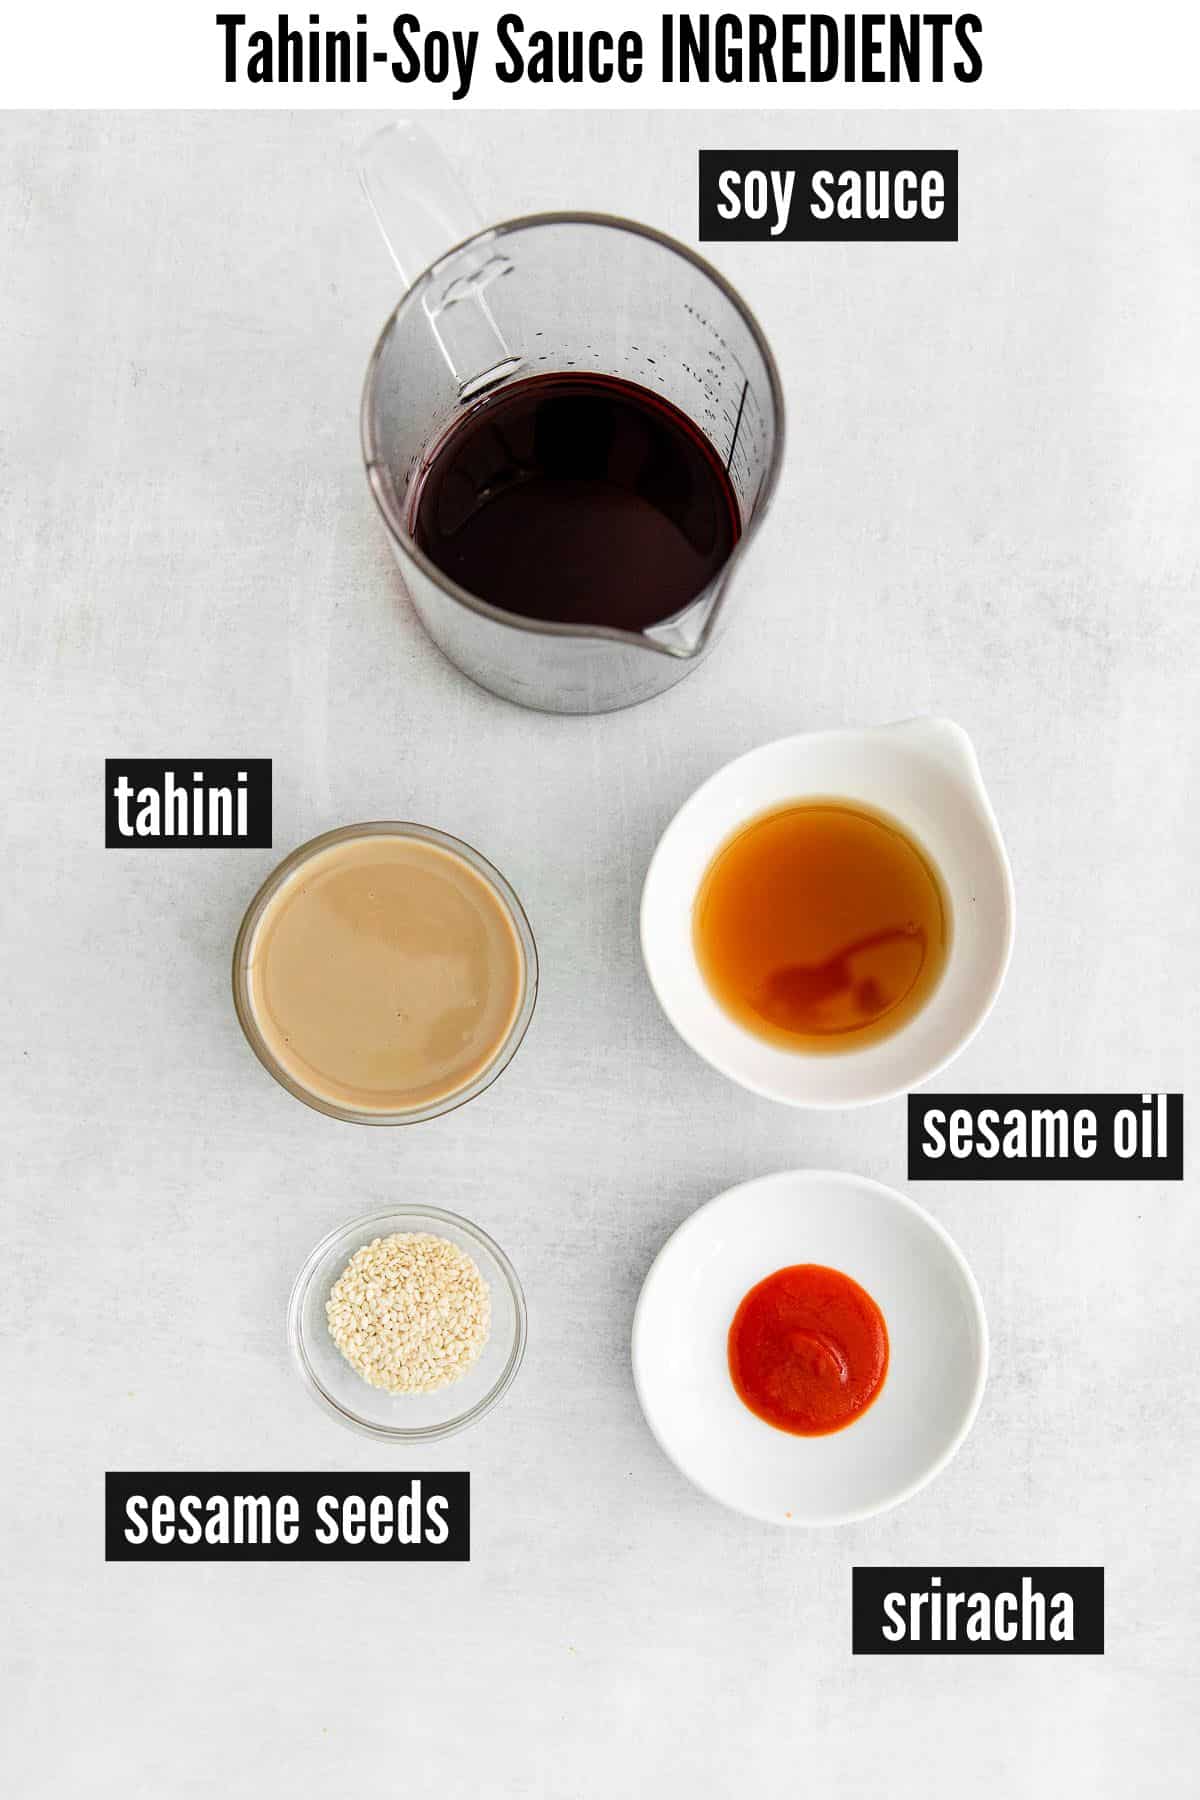 tahini soy sauce labelled ingredients.